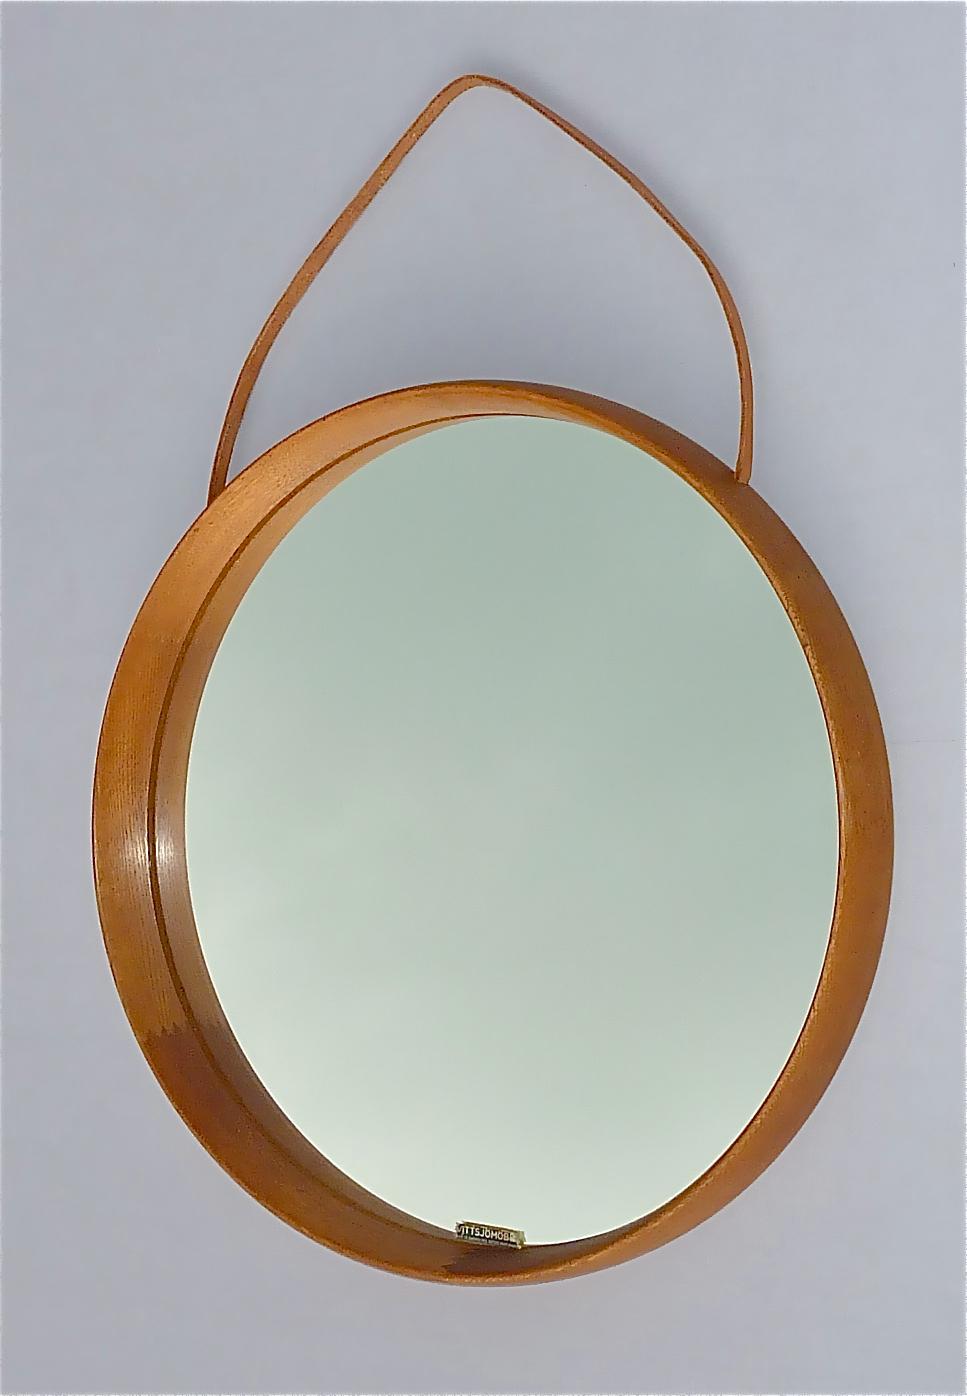 Signed Round Wall Mirror Vittsjö Östen Kristiansson Oak Wood Leather, 1960s For Sale 3